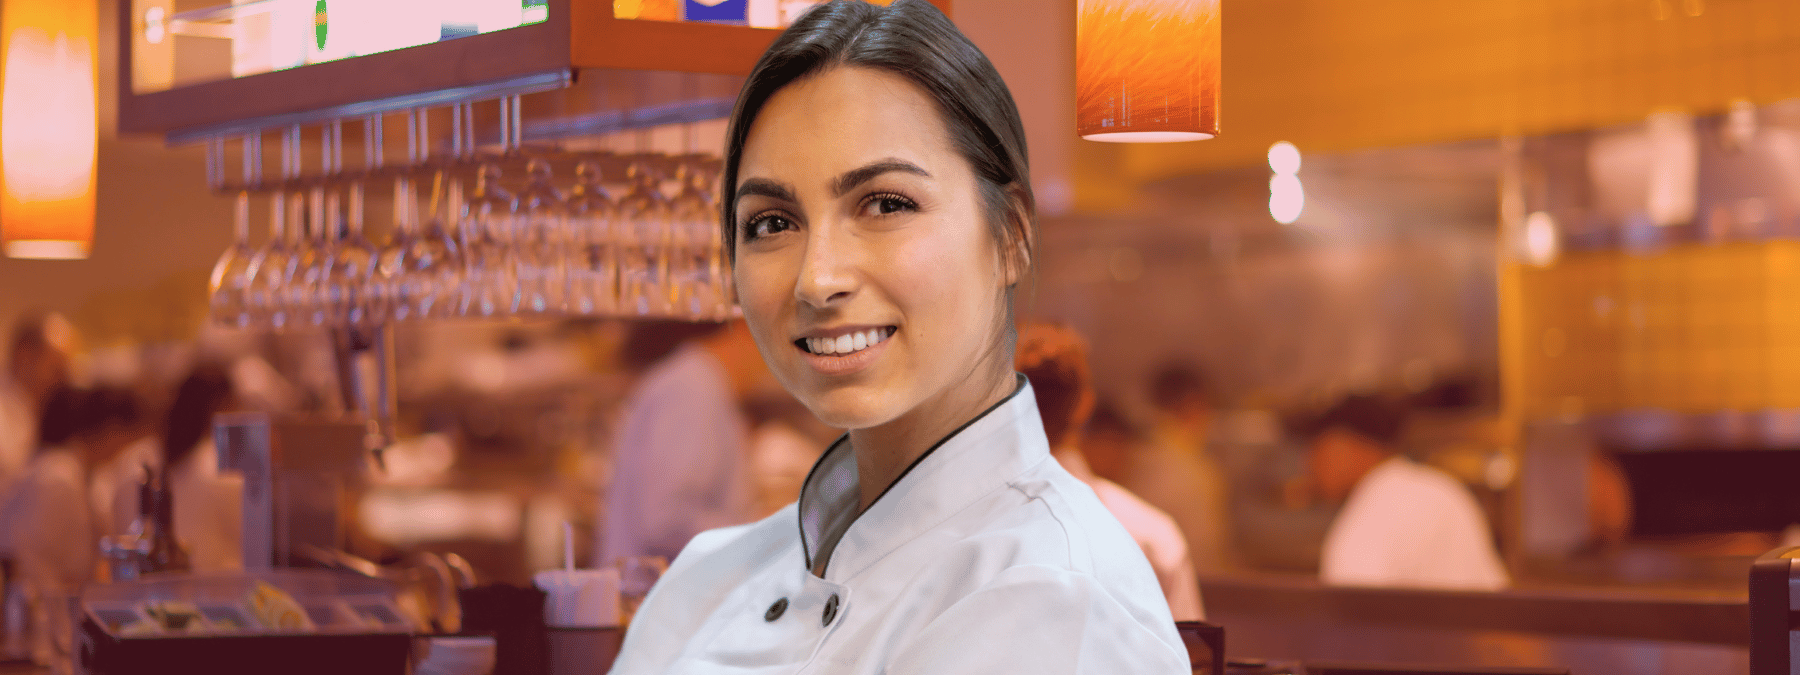 Female chef in restaurant